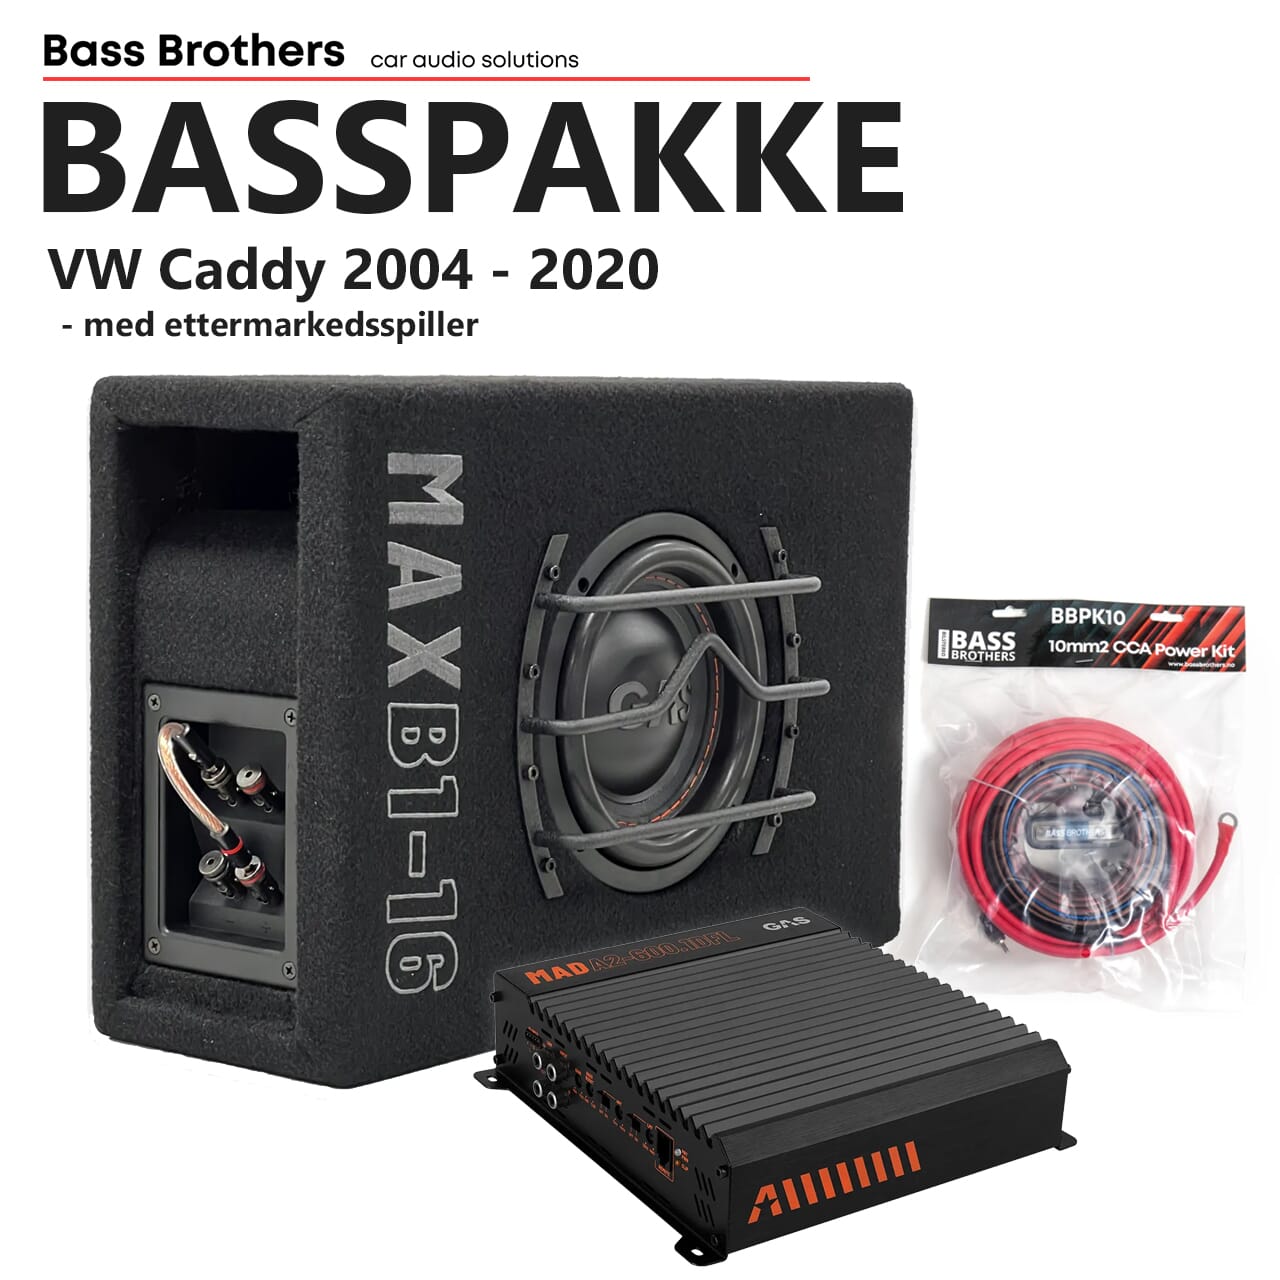 Basspakke for VW Caddy